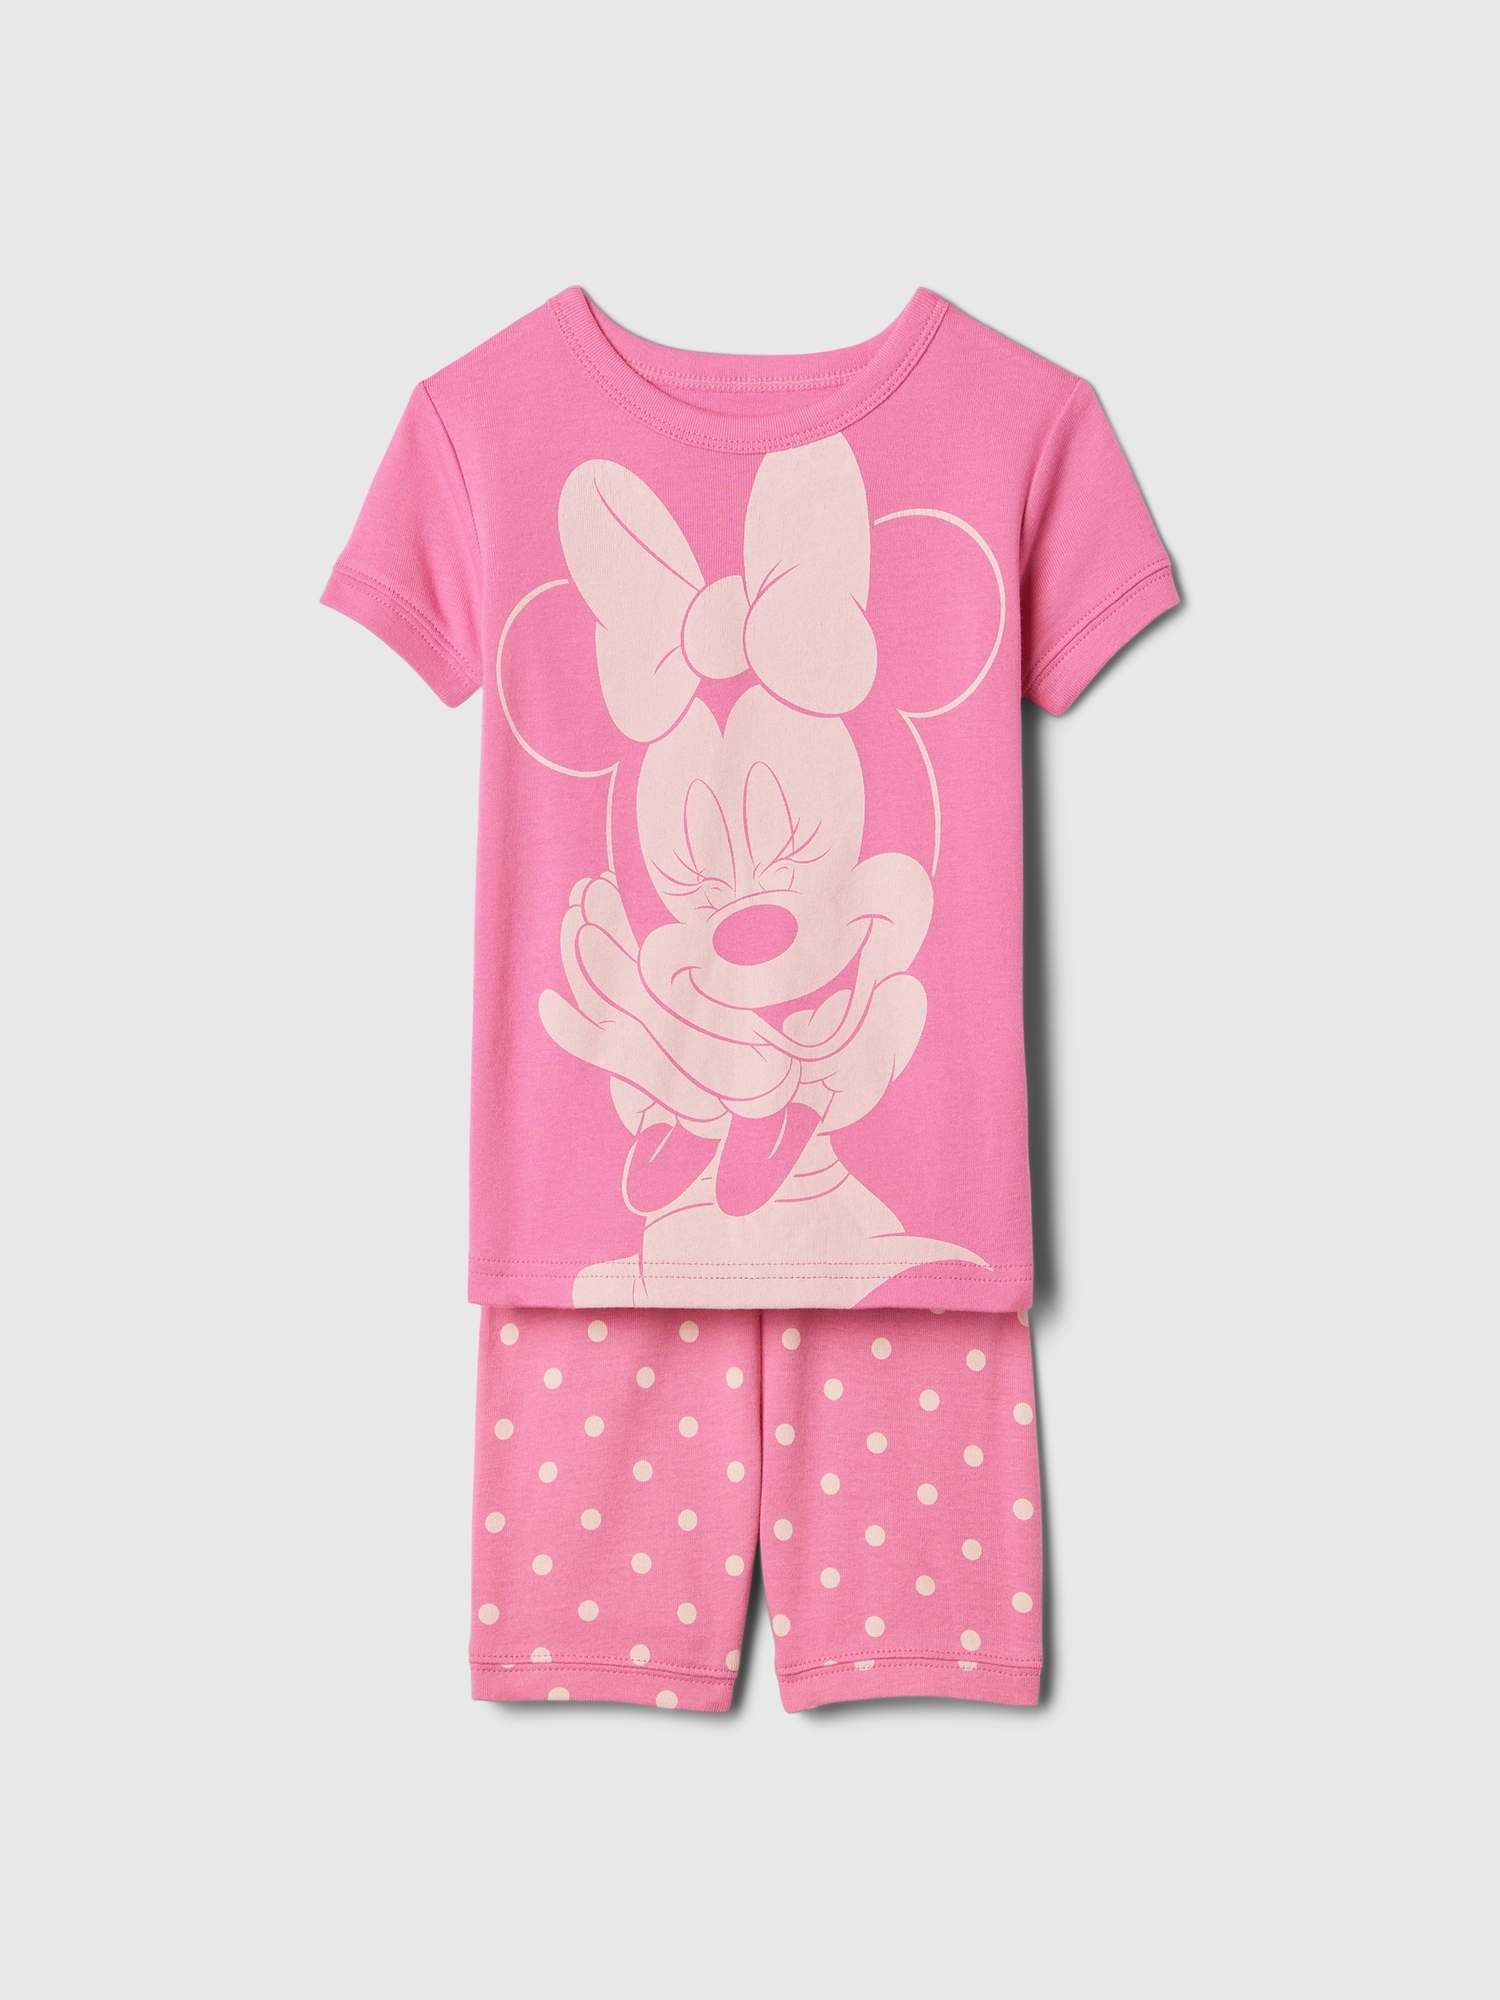 babyGap | Disney Organic Cotton Minnie Mouse PJ Shorts Set